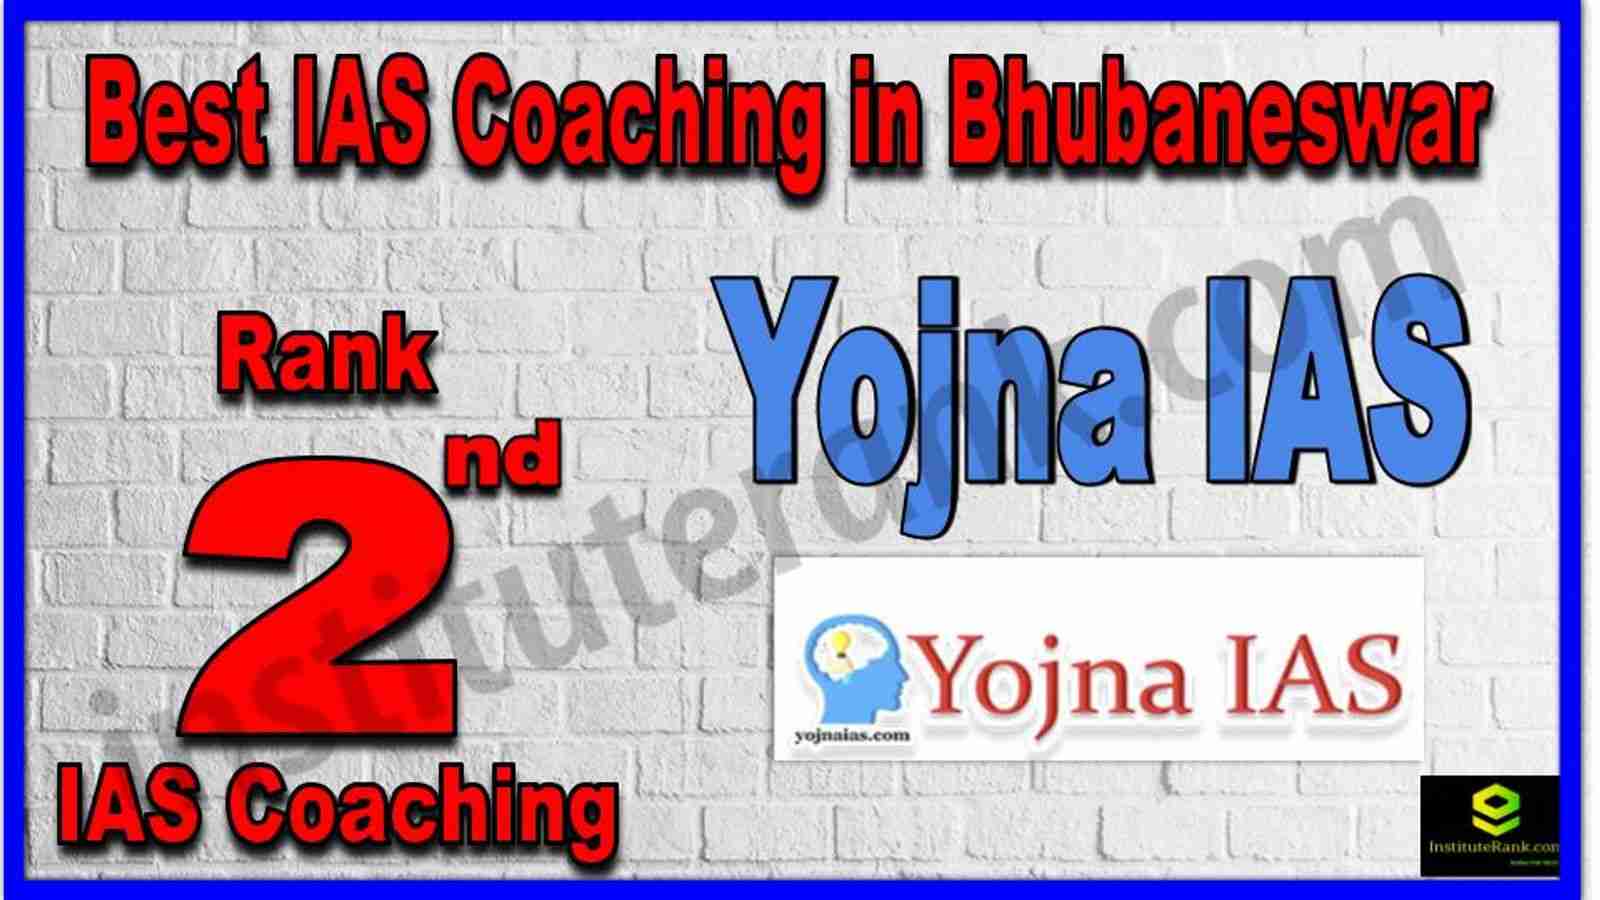 Rank 2nd Best IAS Coaching in Bhubaneswar